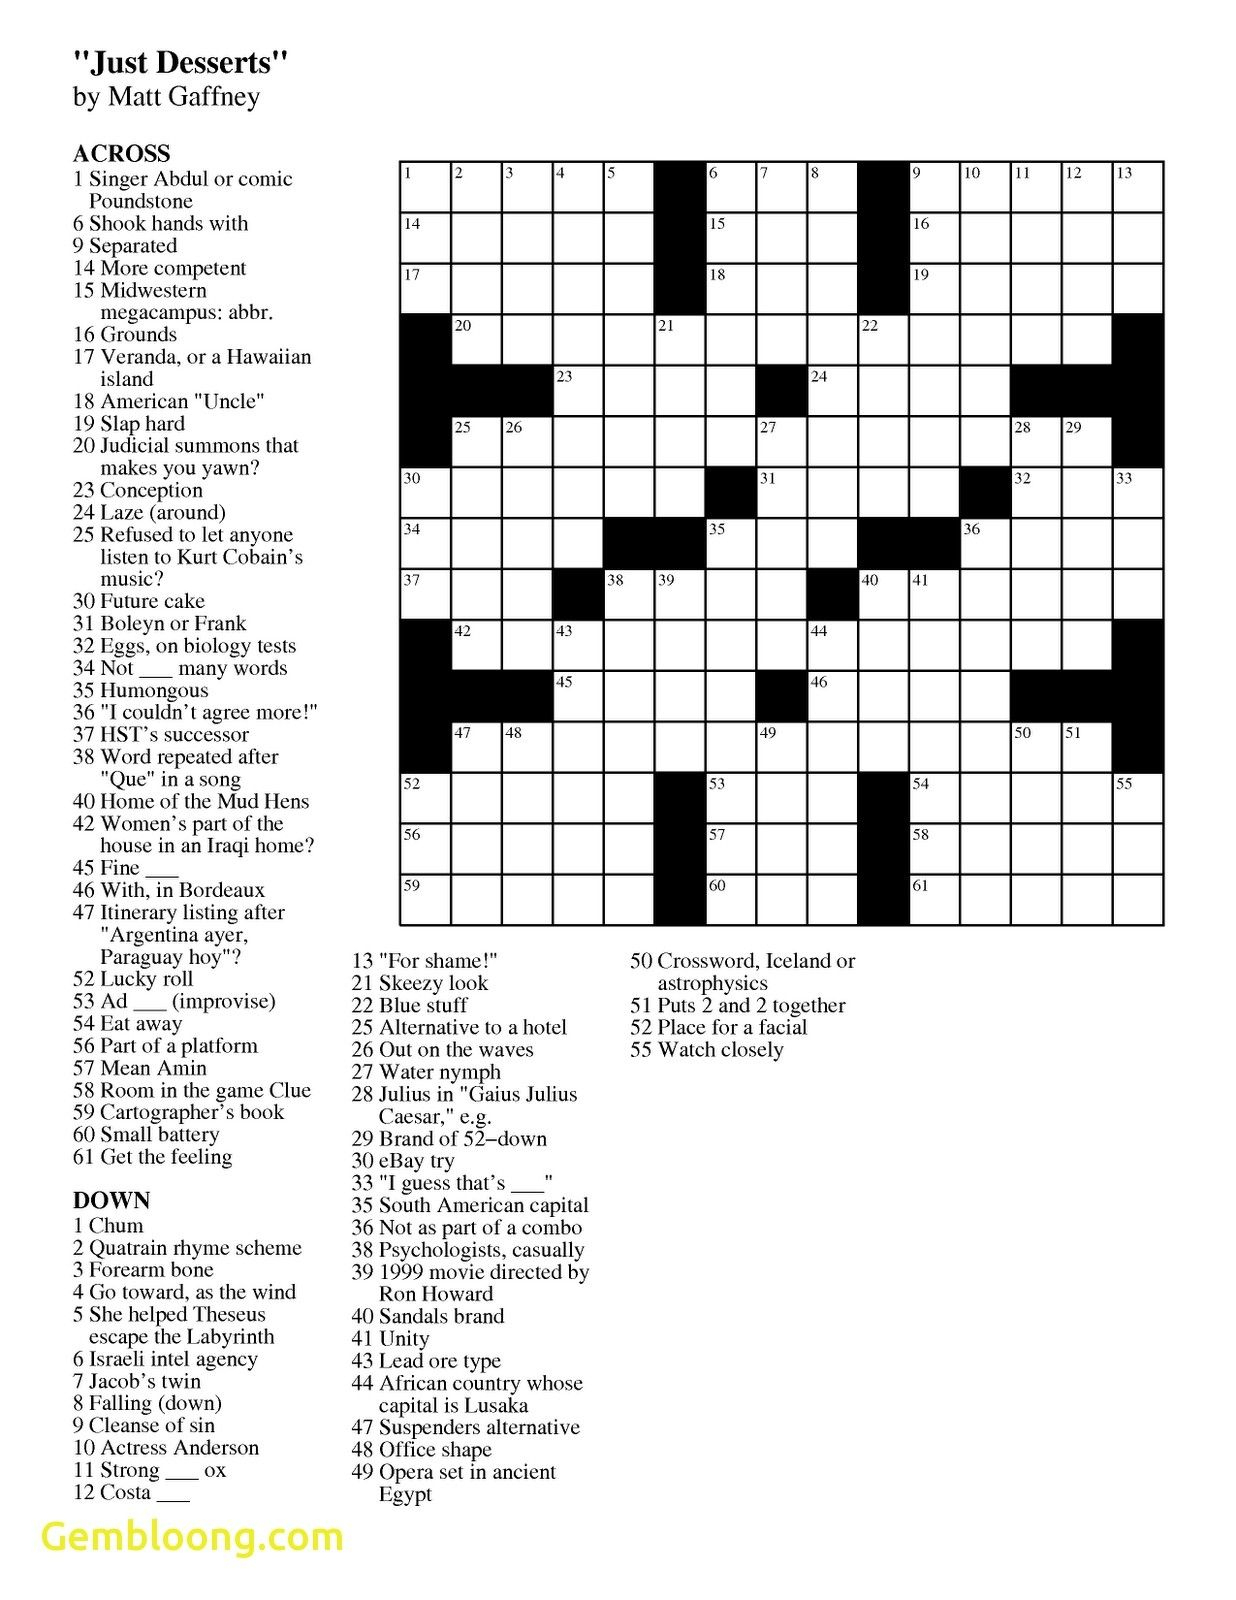 daily crossword puzzle free dictionarycom